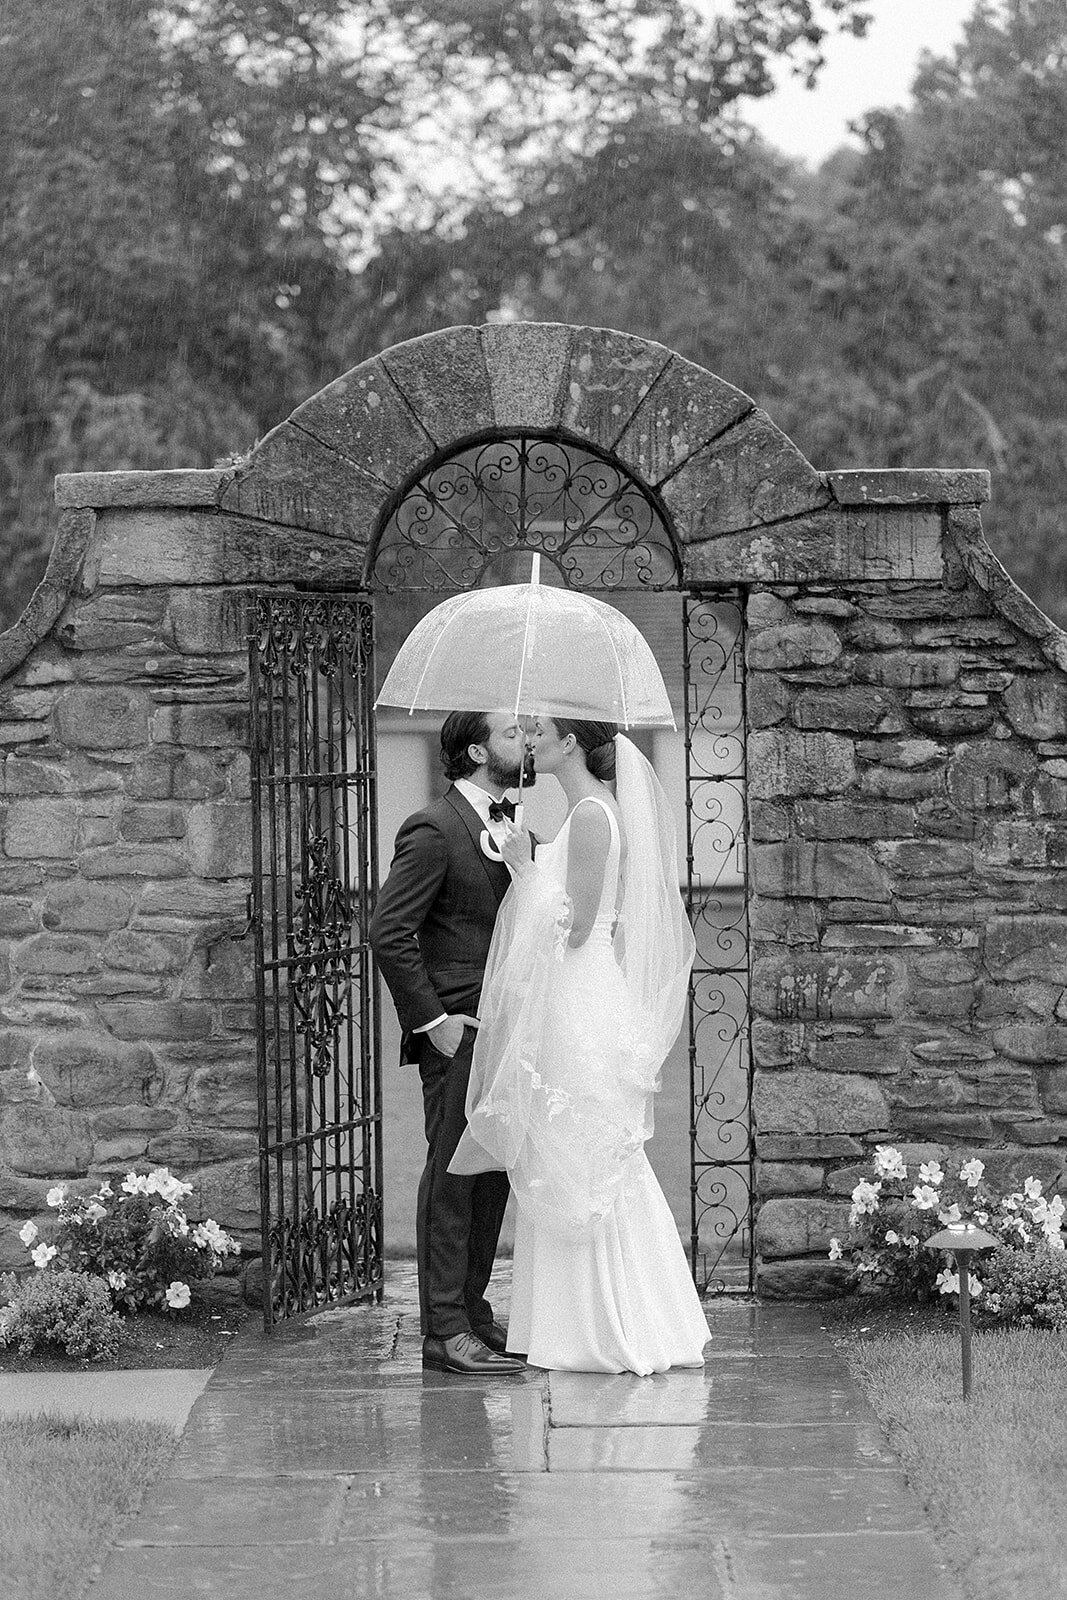 Kate-Murtaugh-Events-RI-wedding-planner-elopement-micro-wedding-intimate-celebration-Shepherds-Run-rain-embrace-umbrella-bride-groom